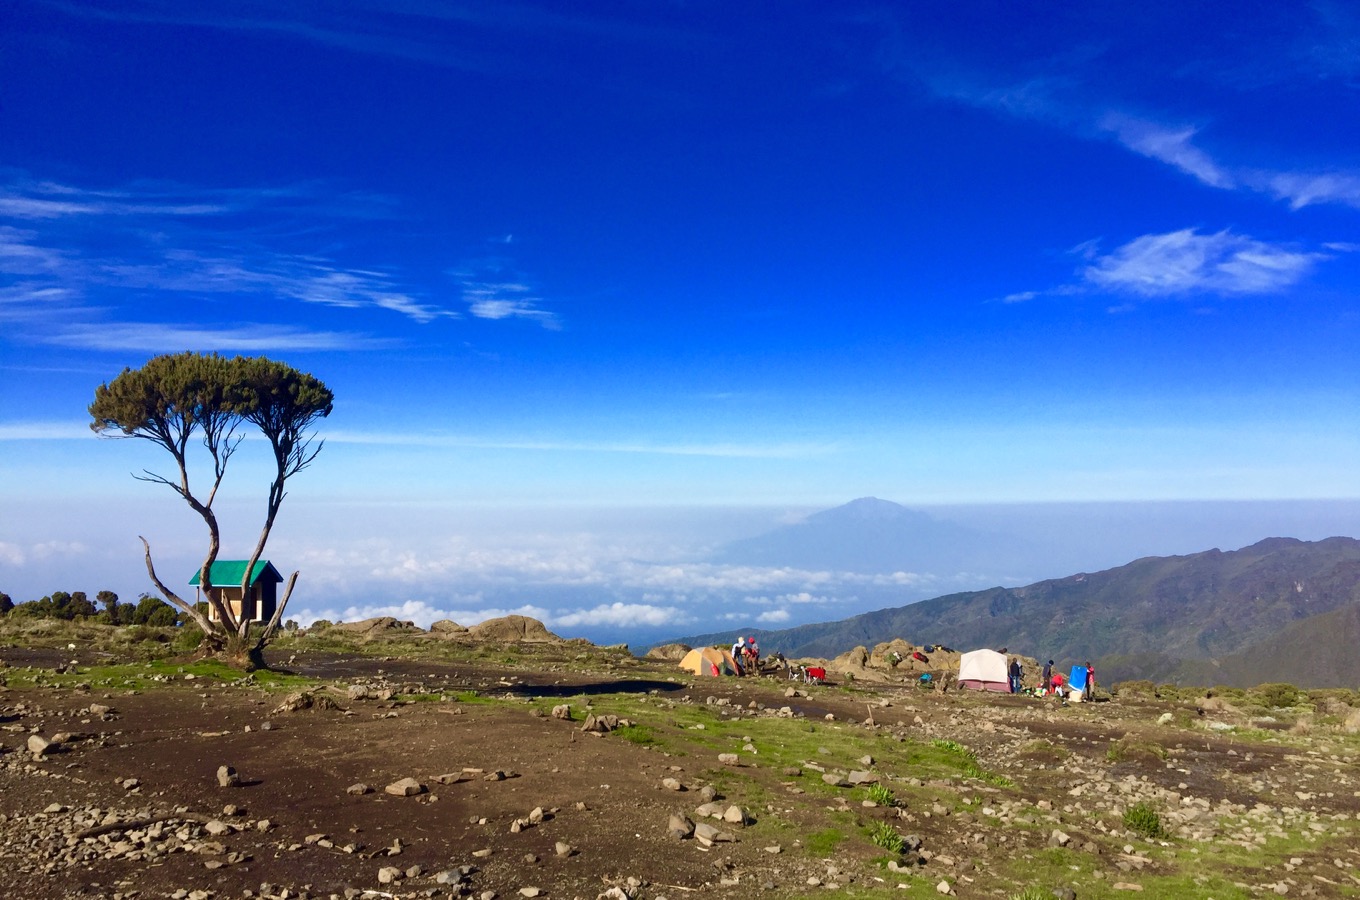 View from Kilimanjaro towards Tanzania